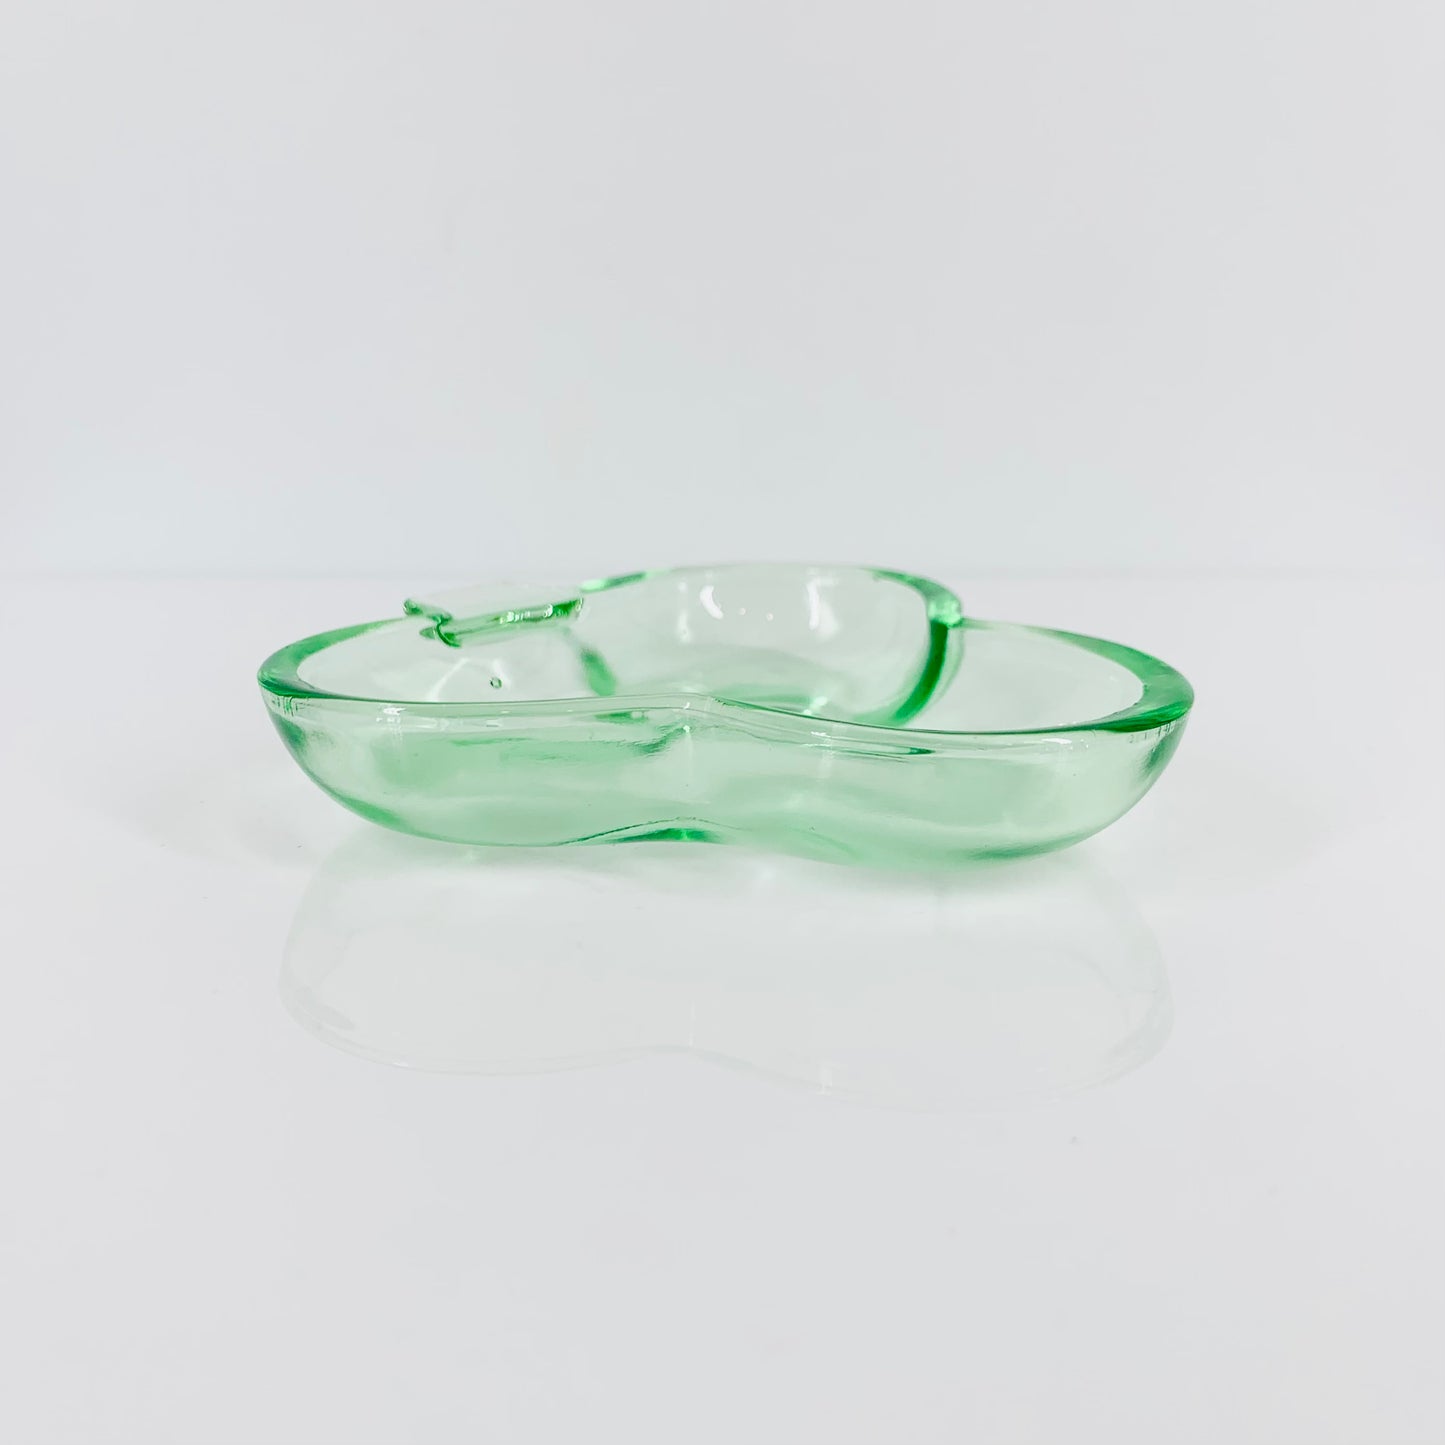 Antique green Depression glass pin dish